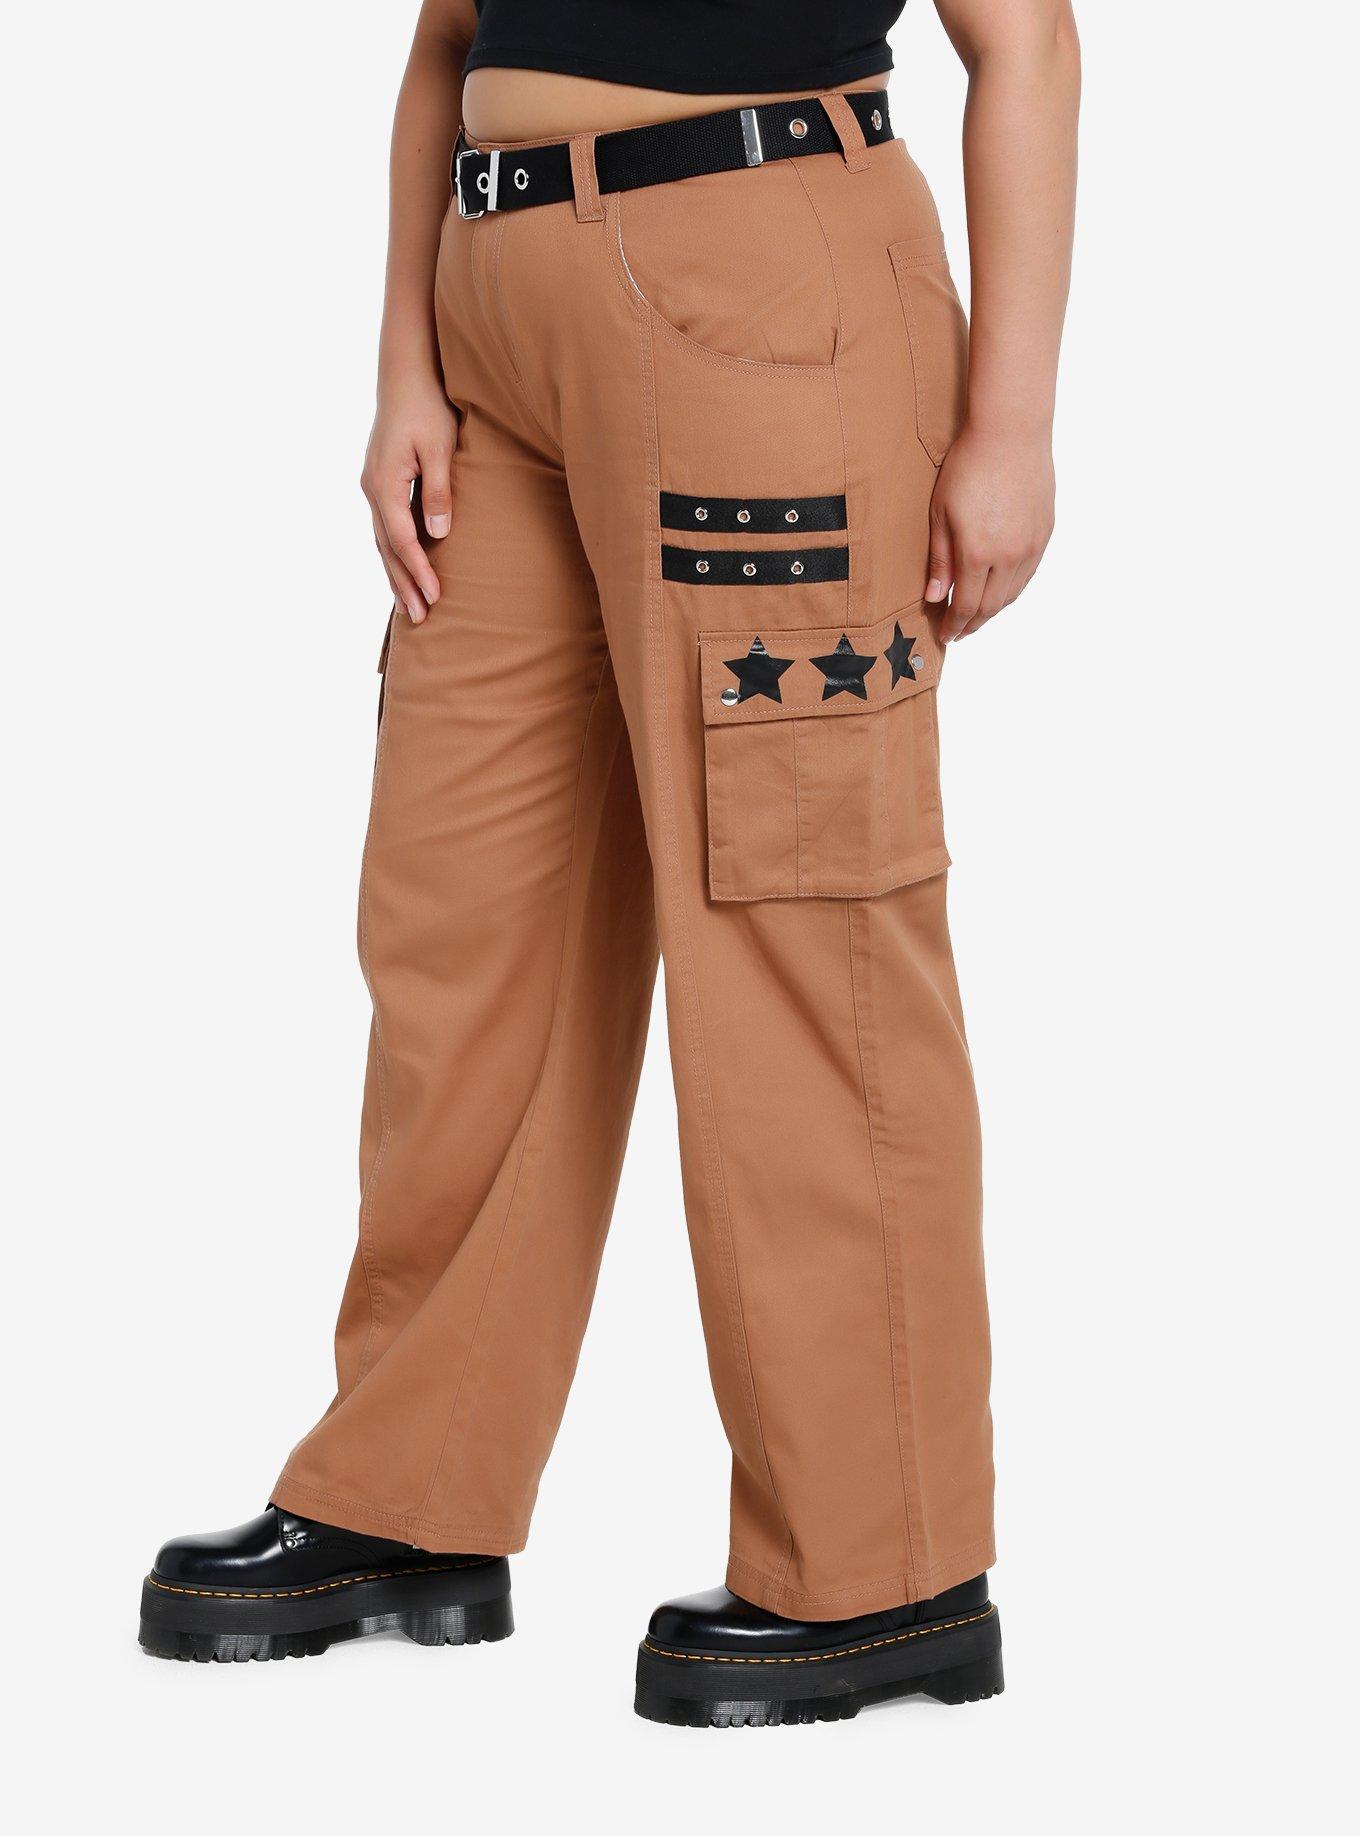 Social Collision Grommets & Stars Girls Cargo Pants Plus Size, BROWN, alternate